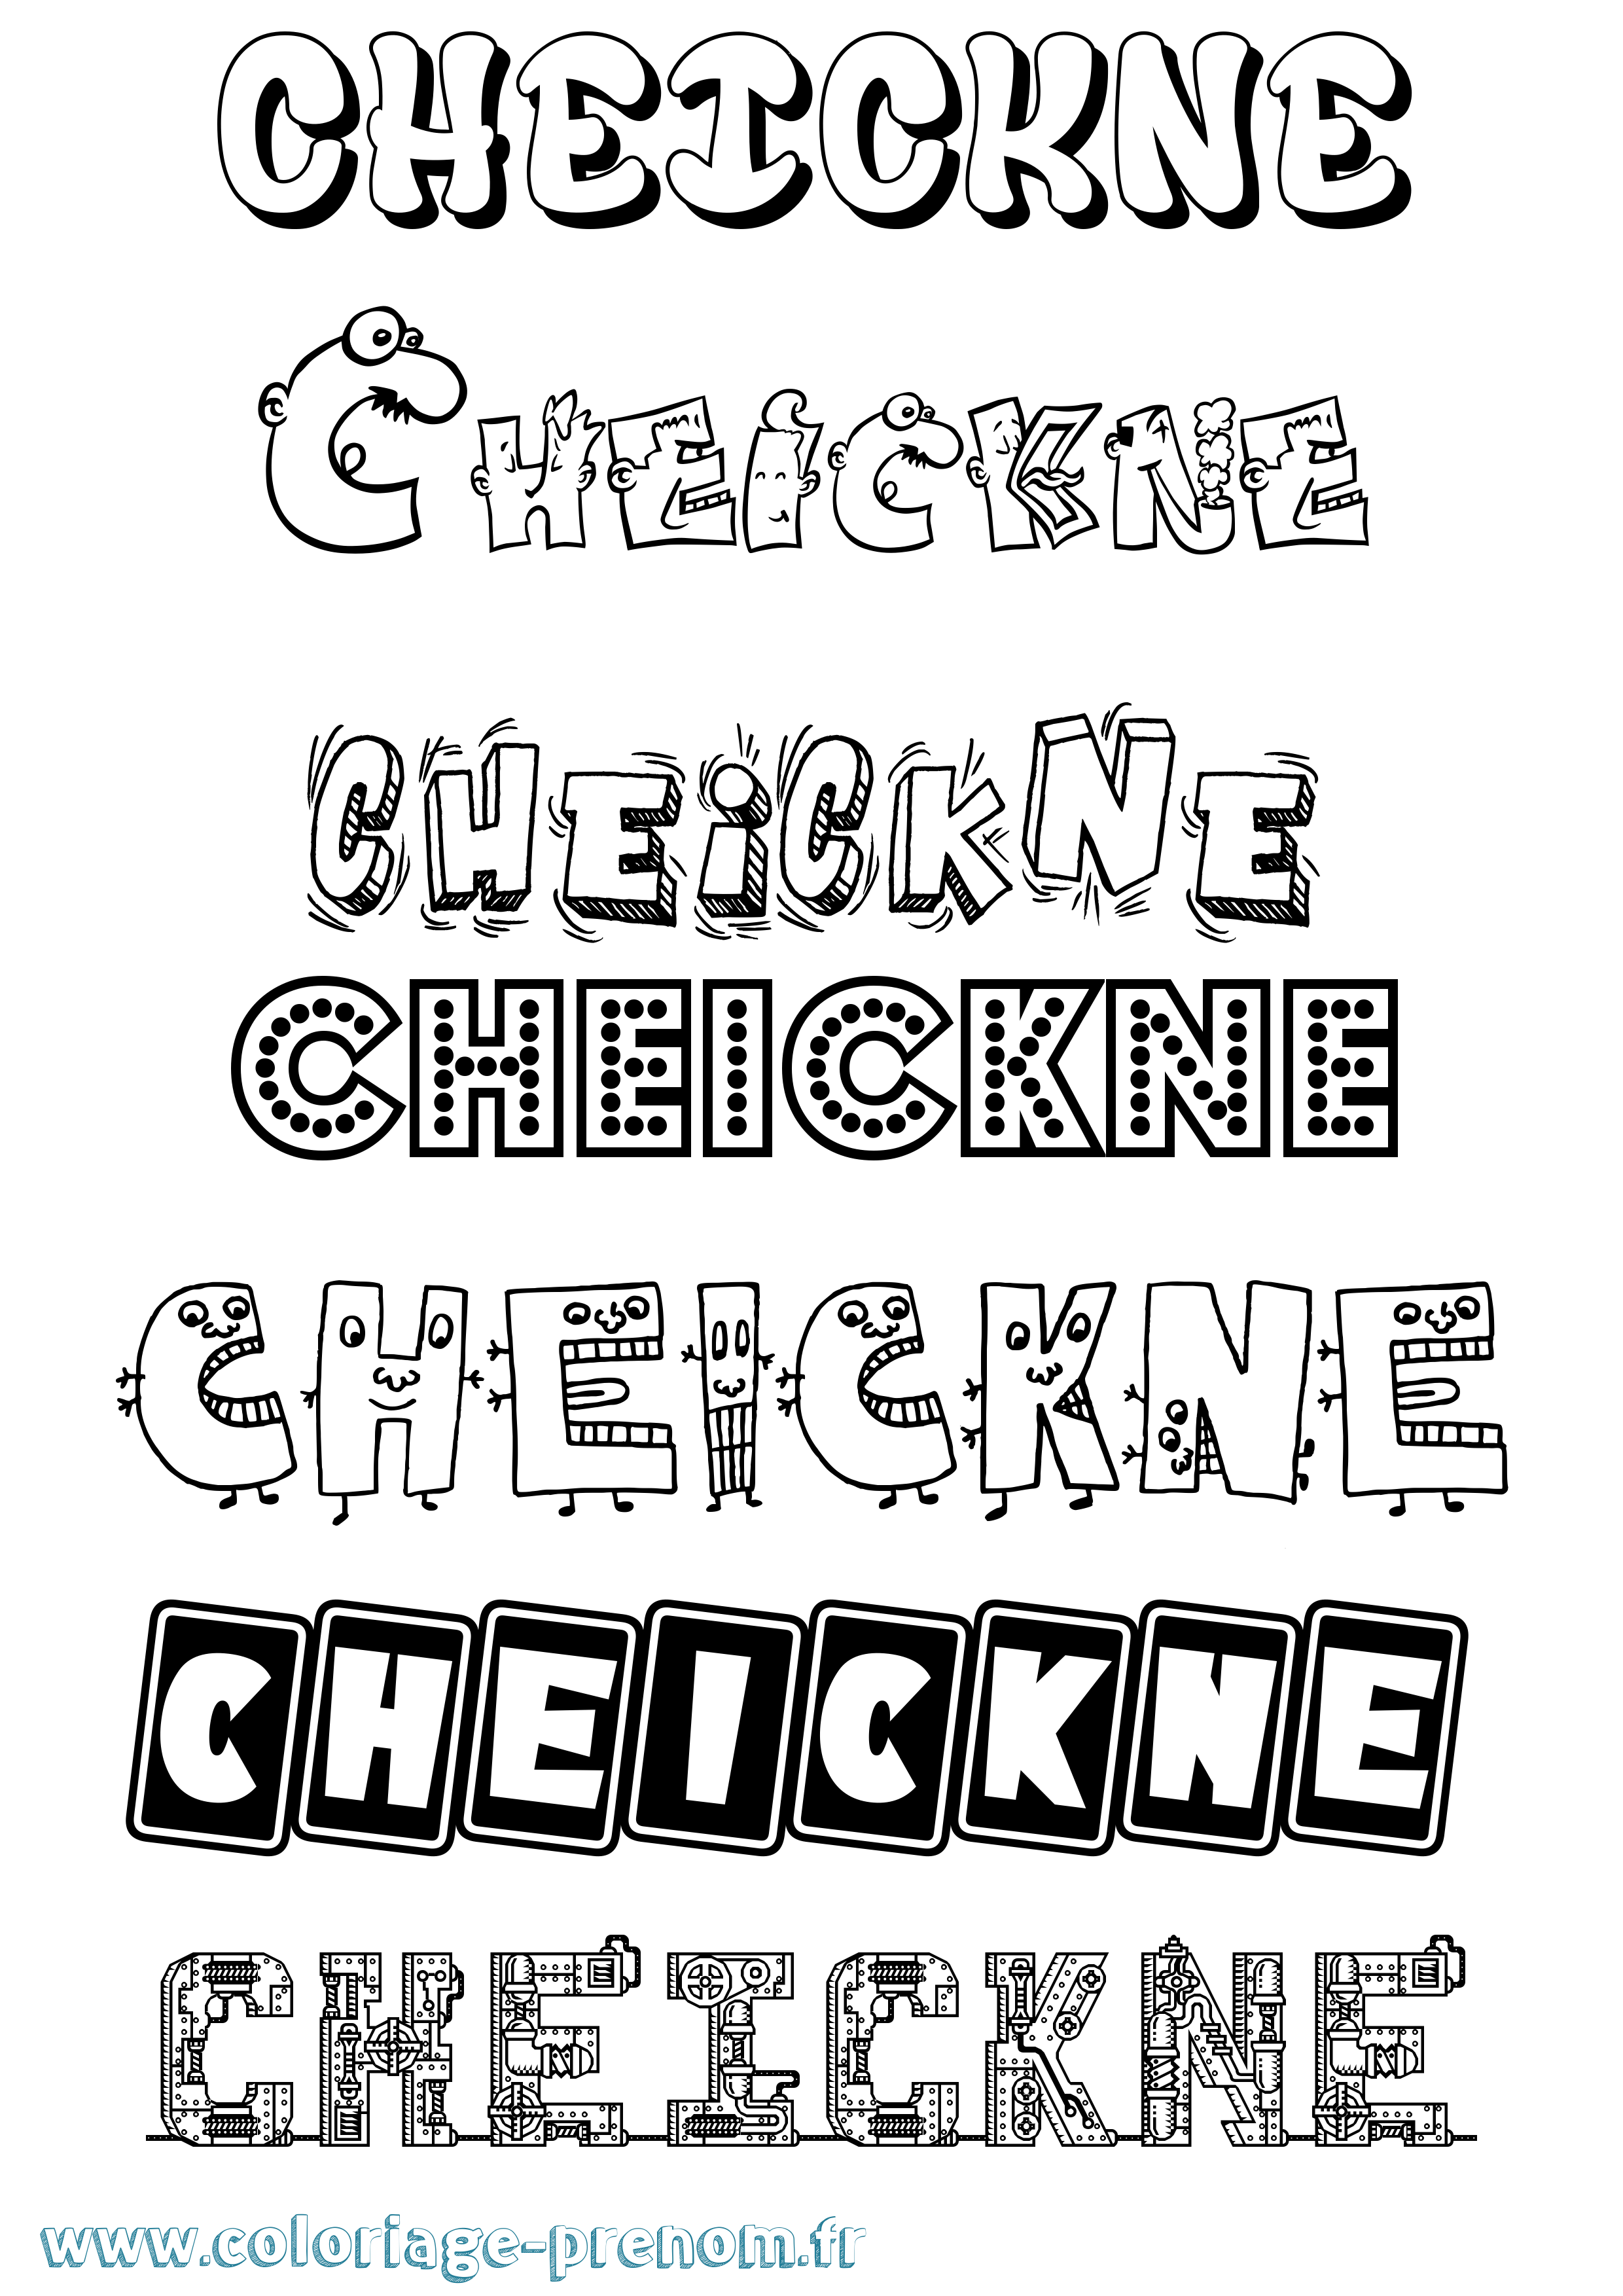 Coloriage prénom Cheickne Fun